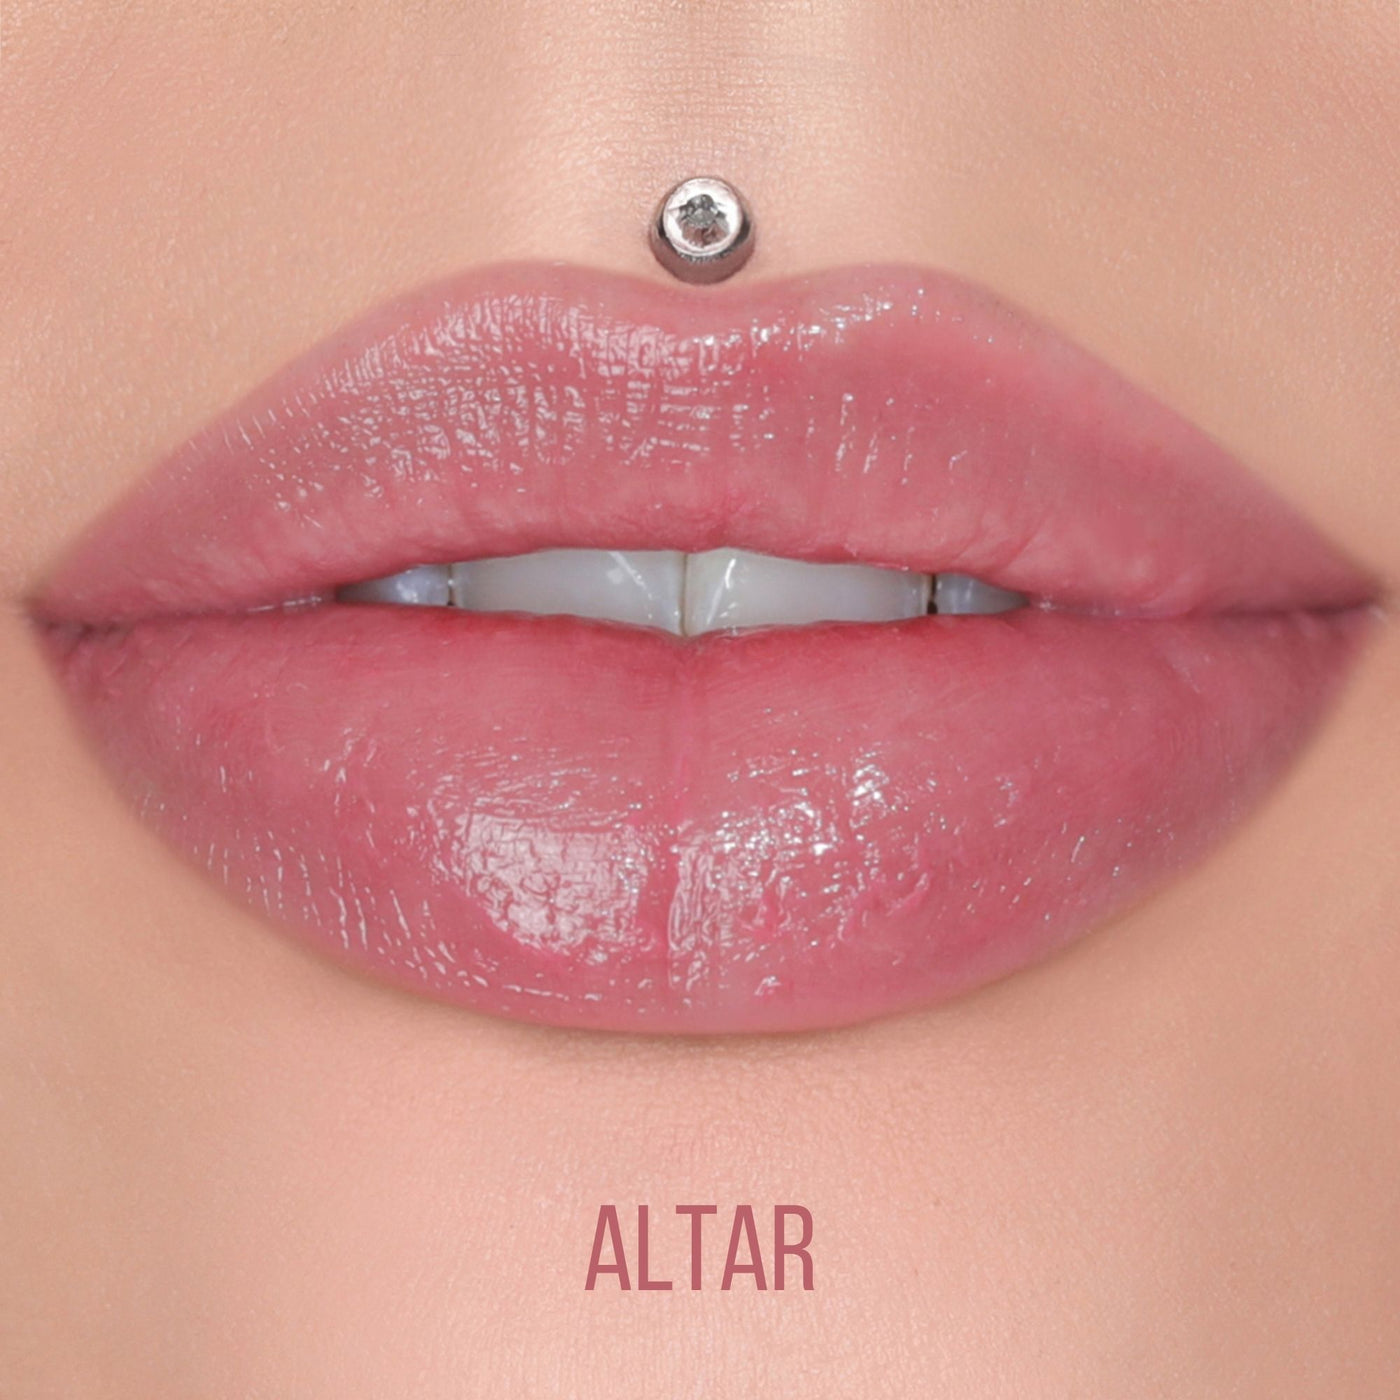 Jeffree Star Cosmetics - Hydrating Glitz Lip Balm